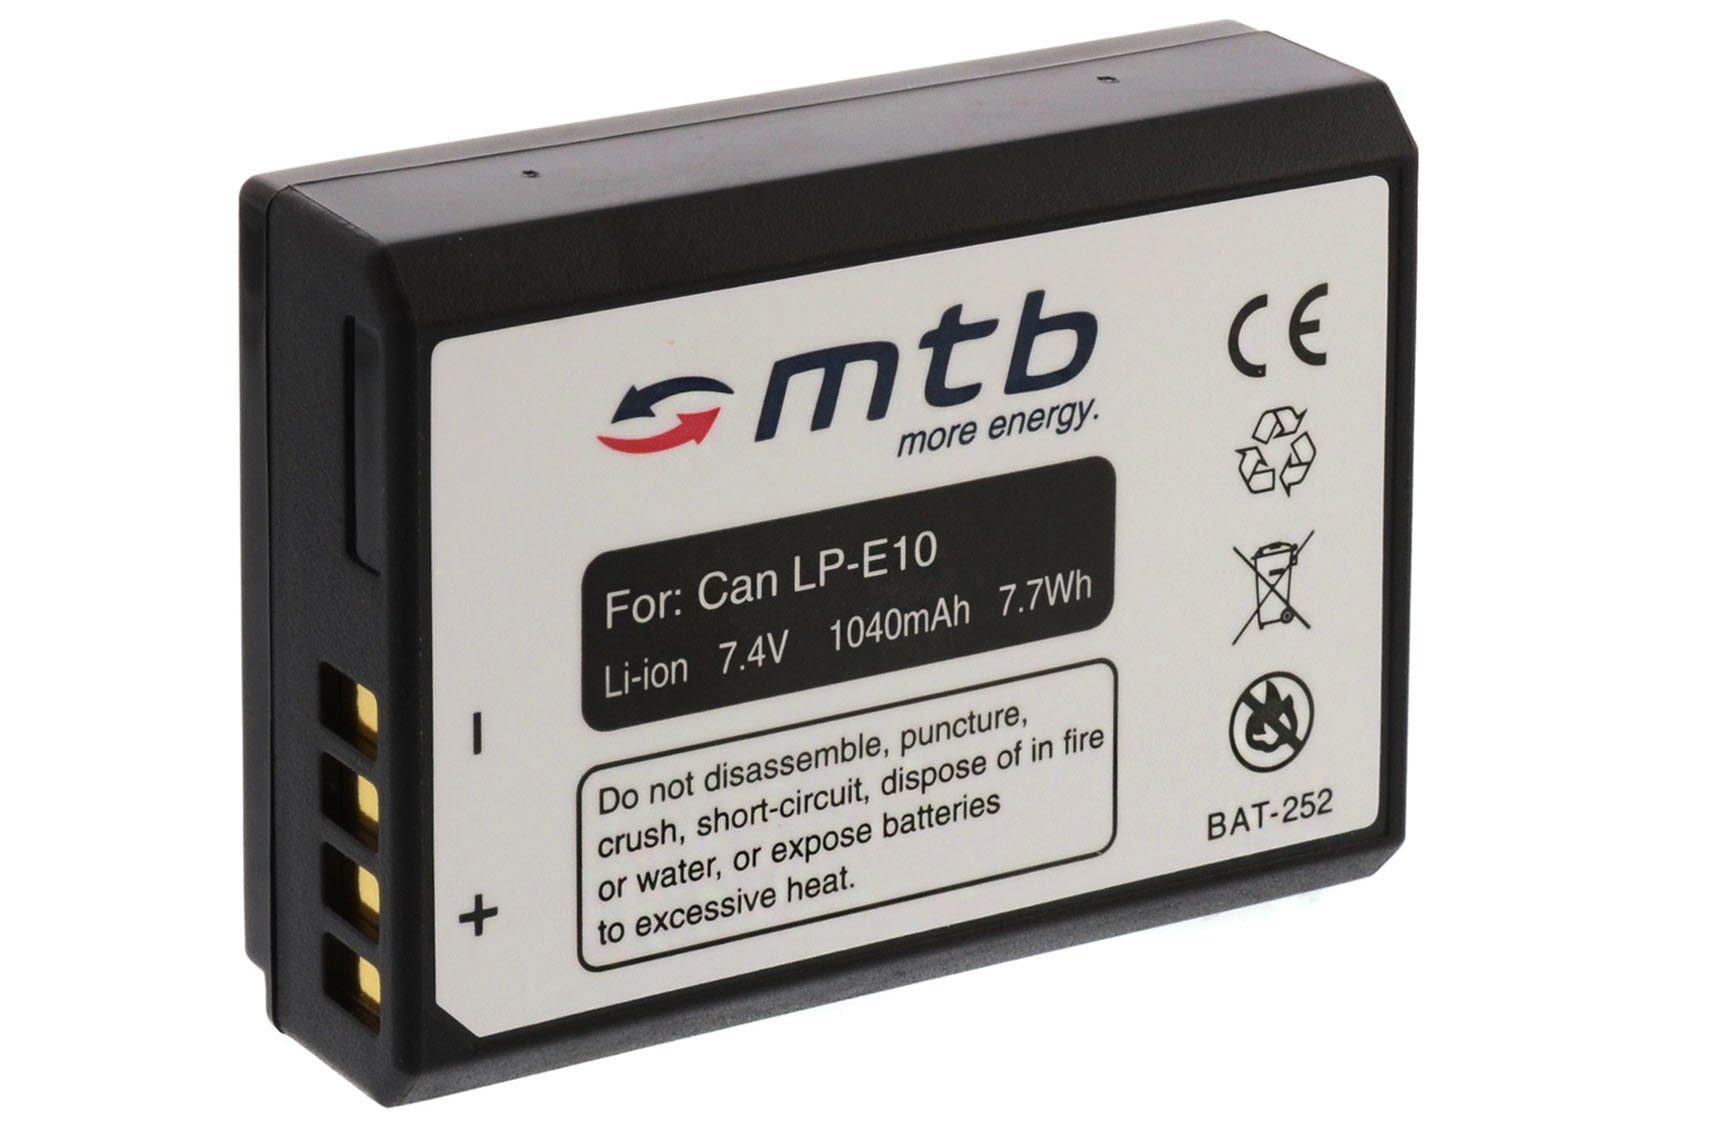 mtb more energy [BAT-252 - Li-Ion] Kamera-Akku kompatibel mit Akku-Typ Canon LP-E10 1040 mAh (7,4 V), passend für: Canon EOS 1100D, 1200D…